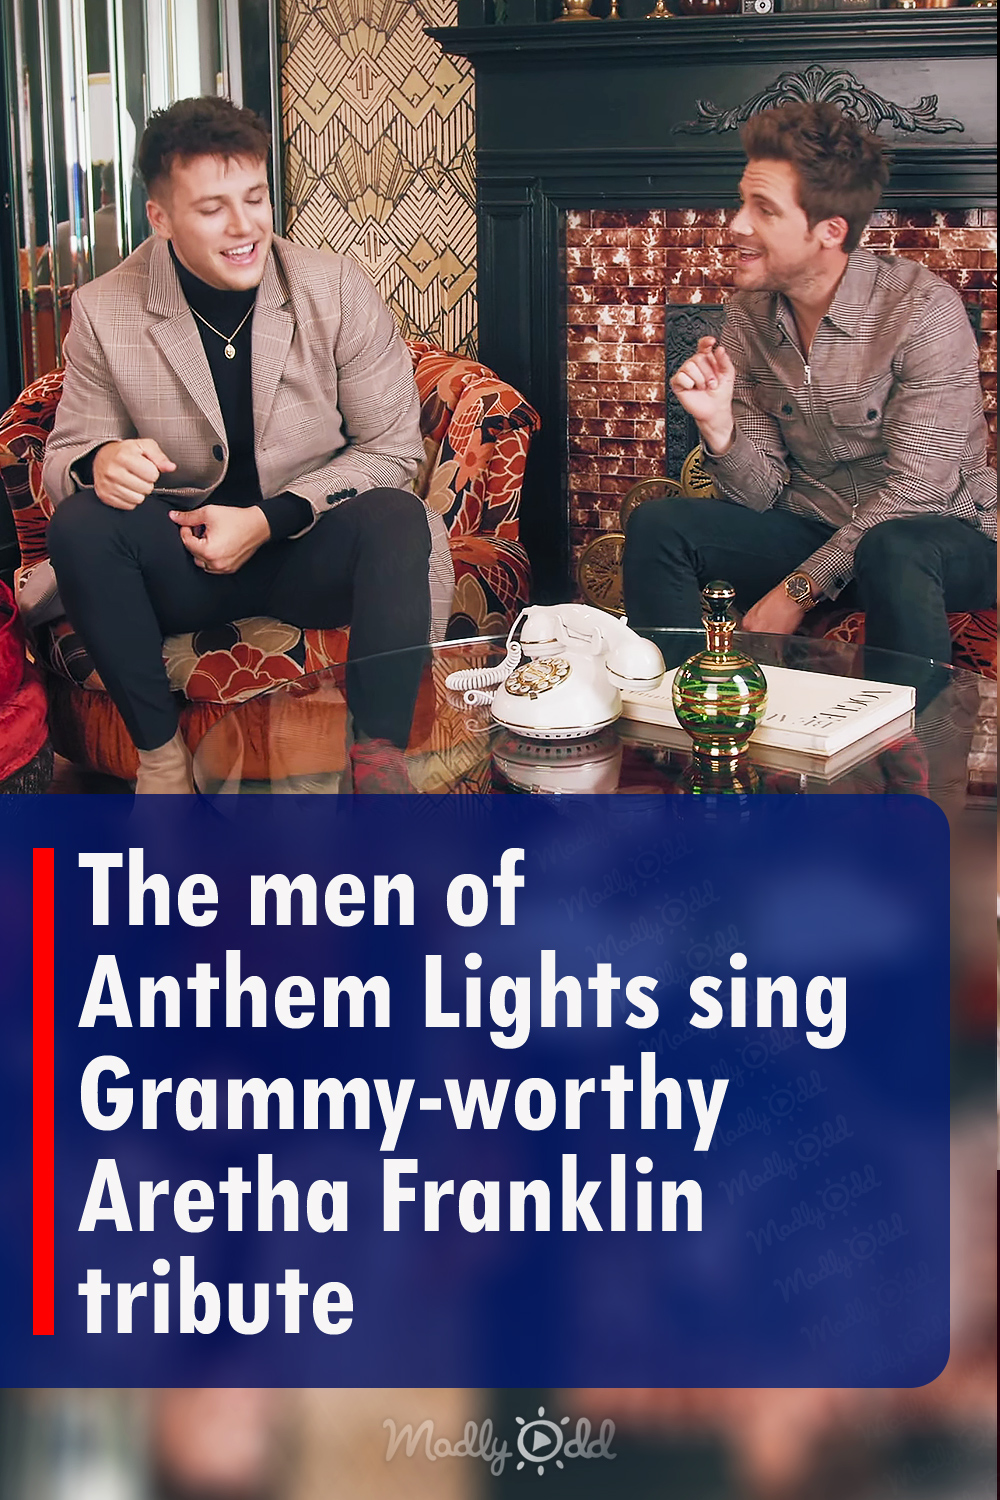 The men of Anthem Lights sing Grammy-worthy Aretha Franklin tribute